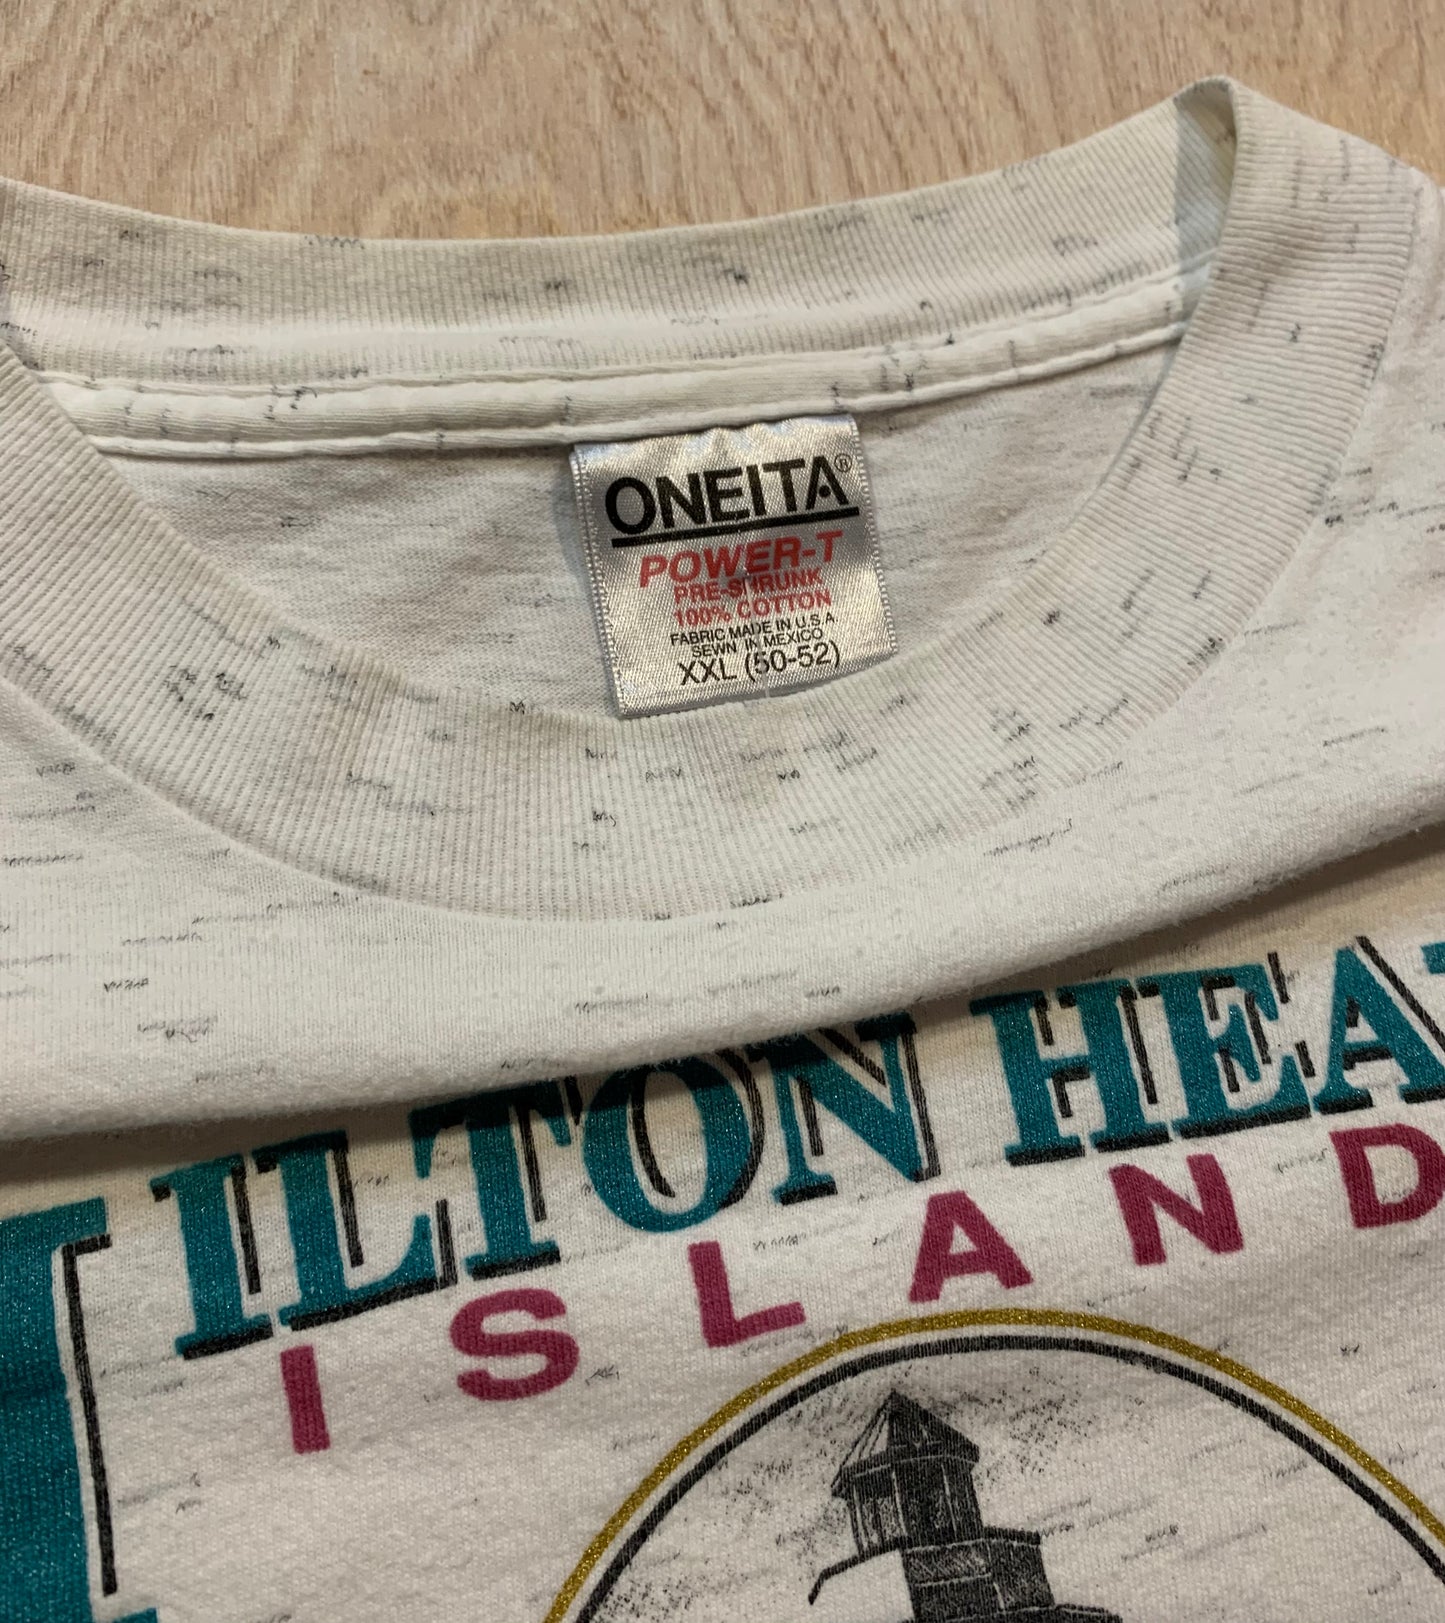 90's Hilton Head Island South Carolina T-Shirt